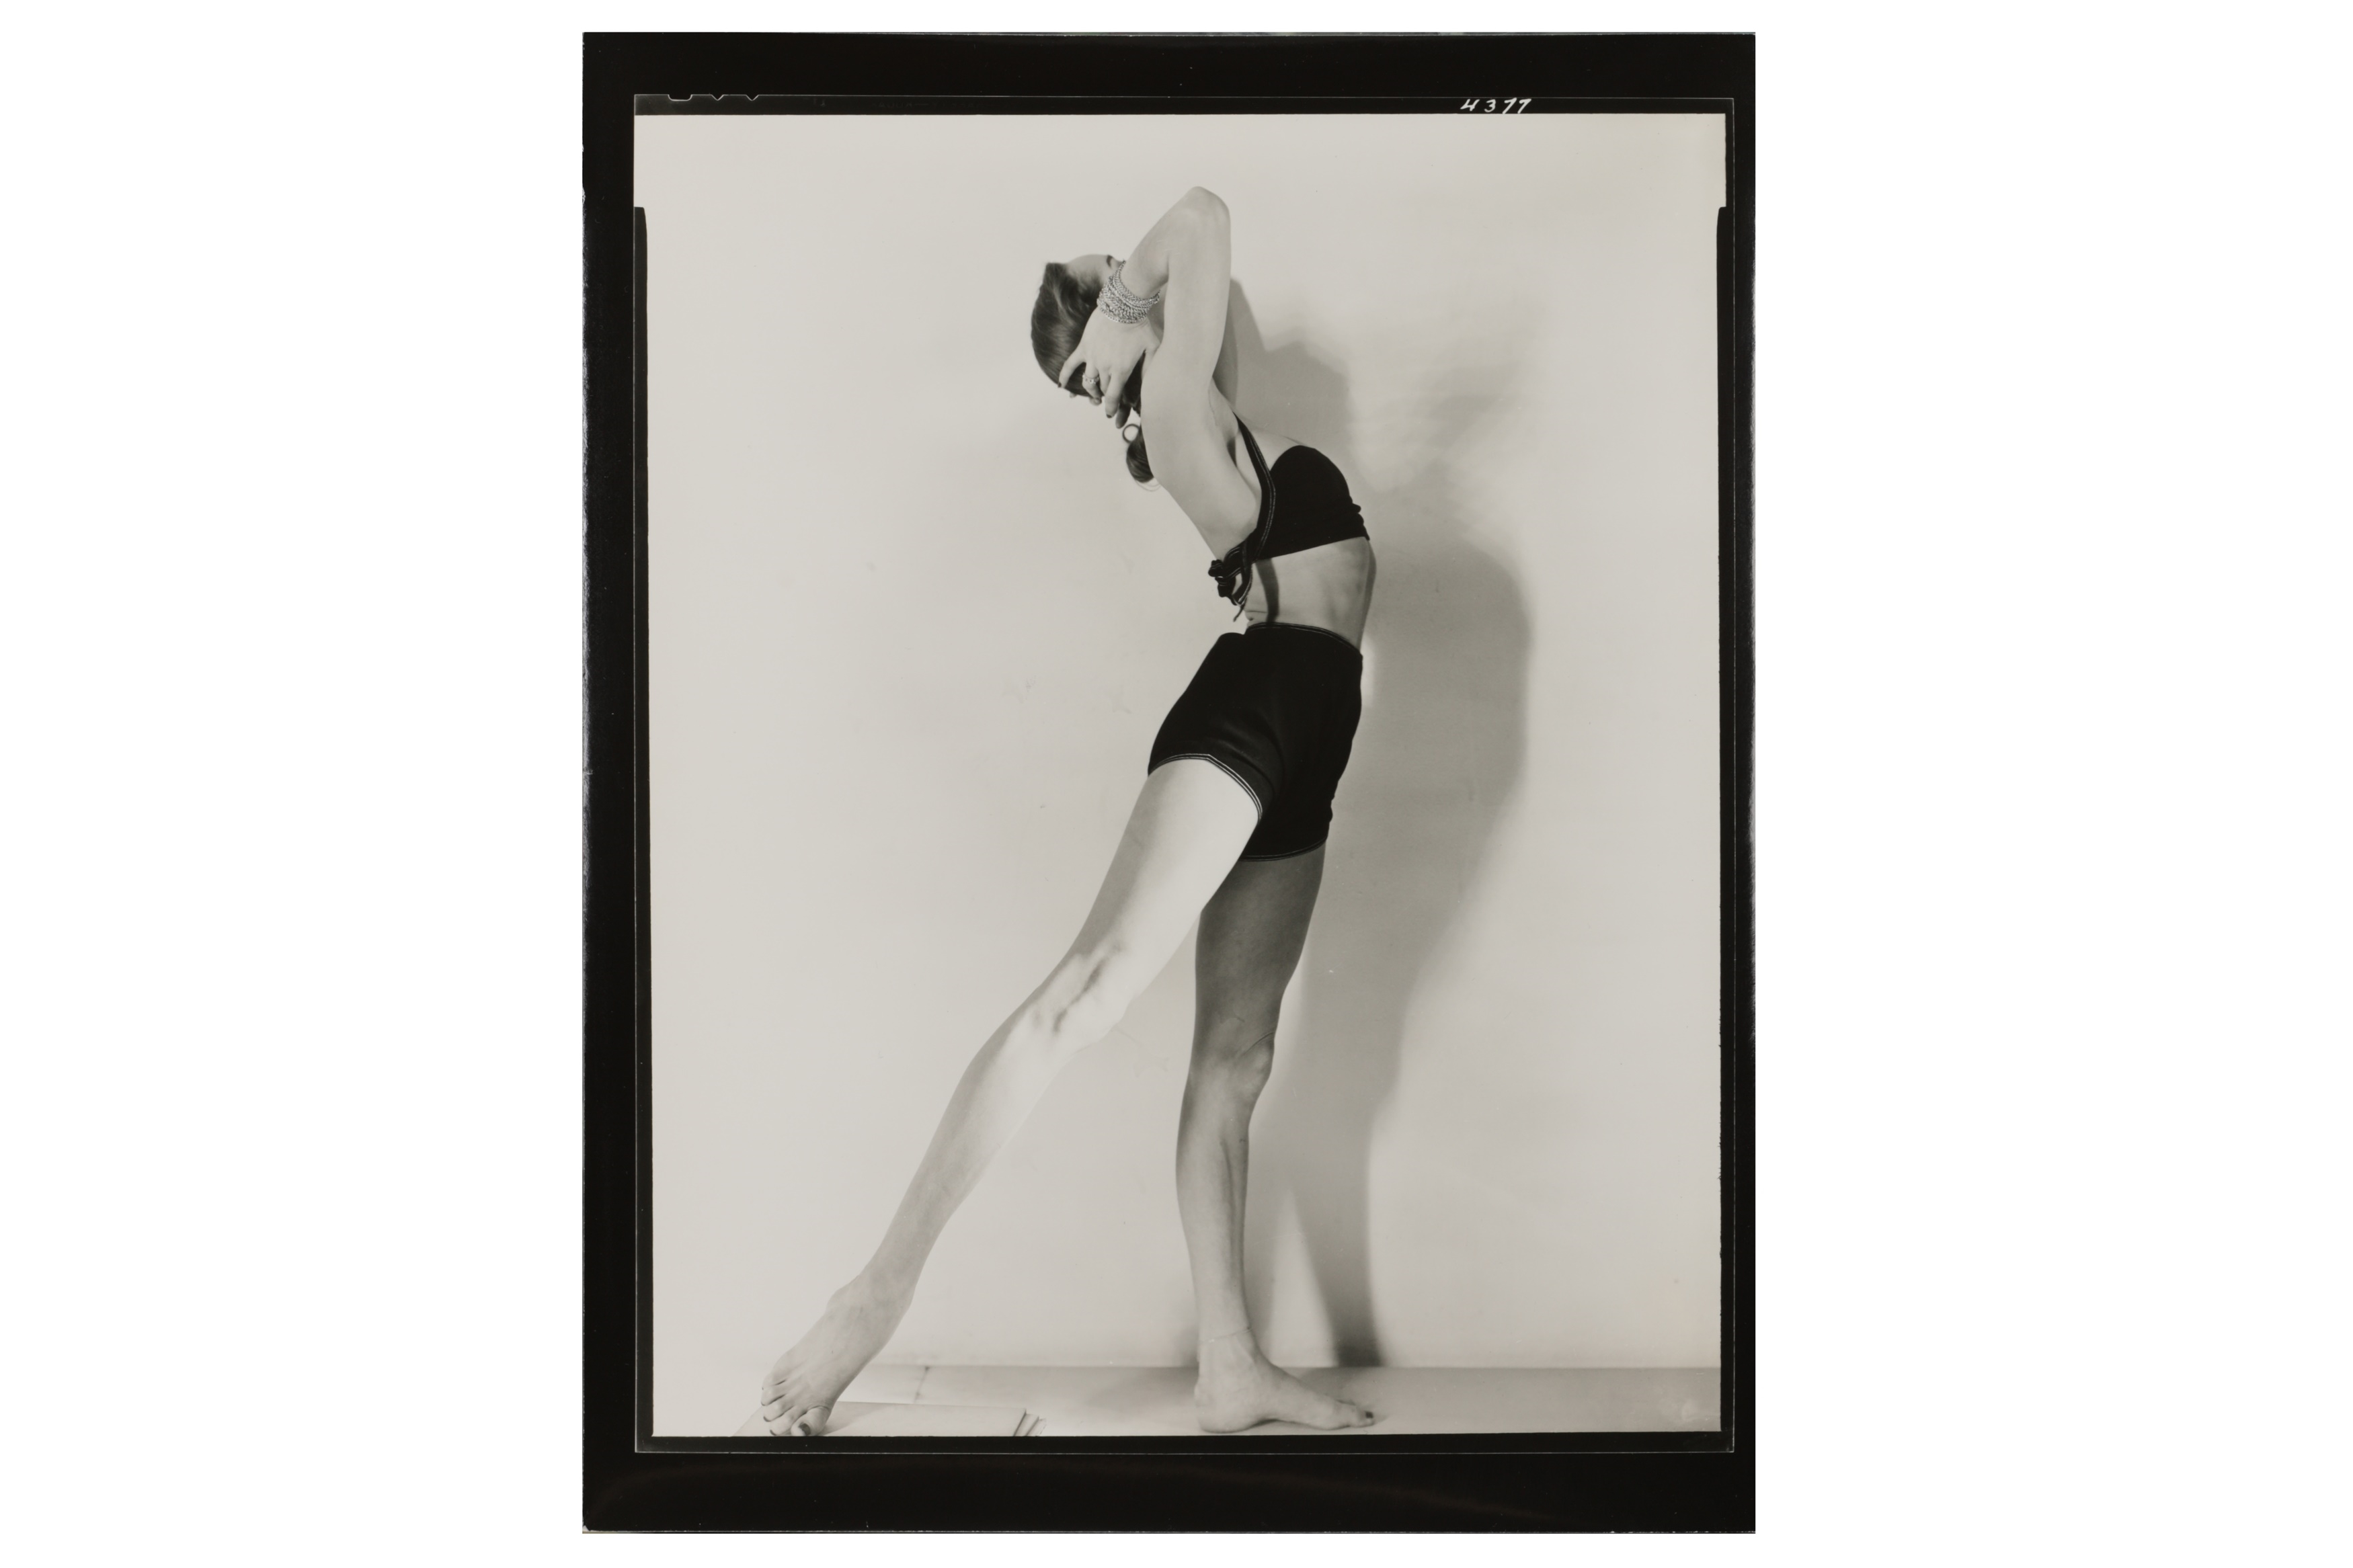 A BALLERINA POSING FOR A FASHION PHOTOSHOOT by Martin Munkacsi